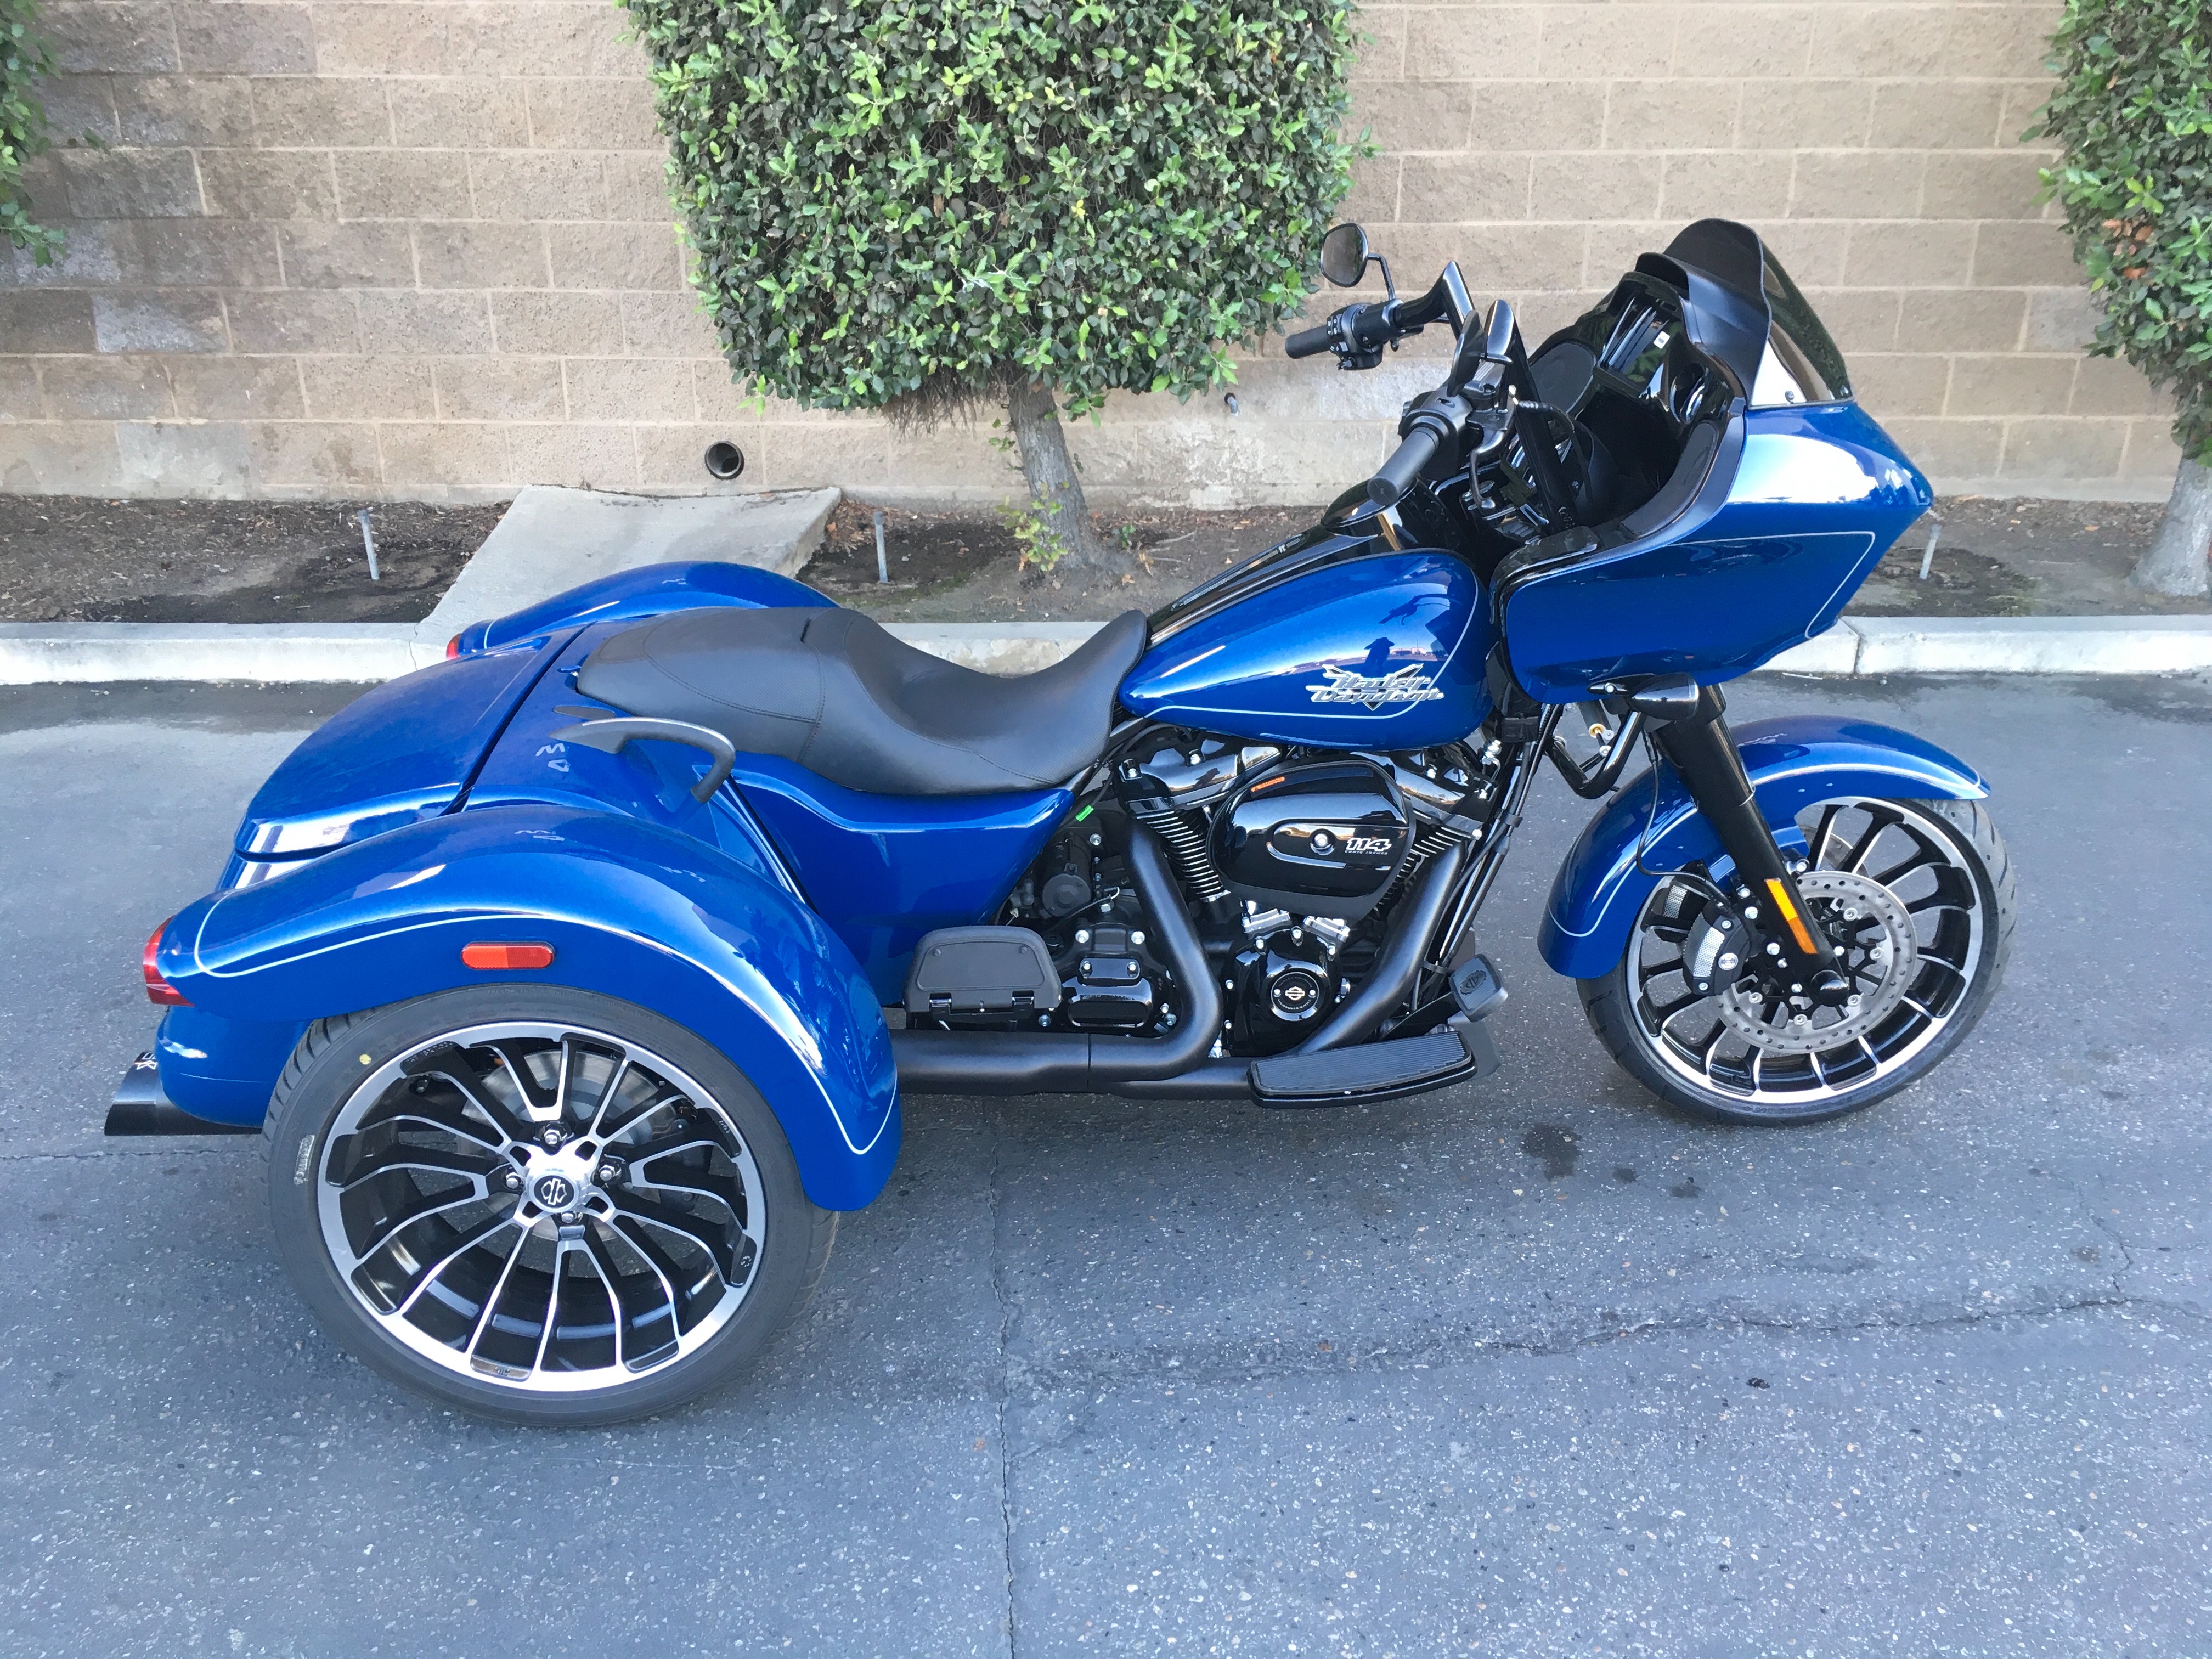 Harley-Davidson Chopper 3,1 Gallonen Benzintank – California